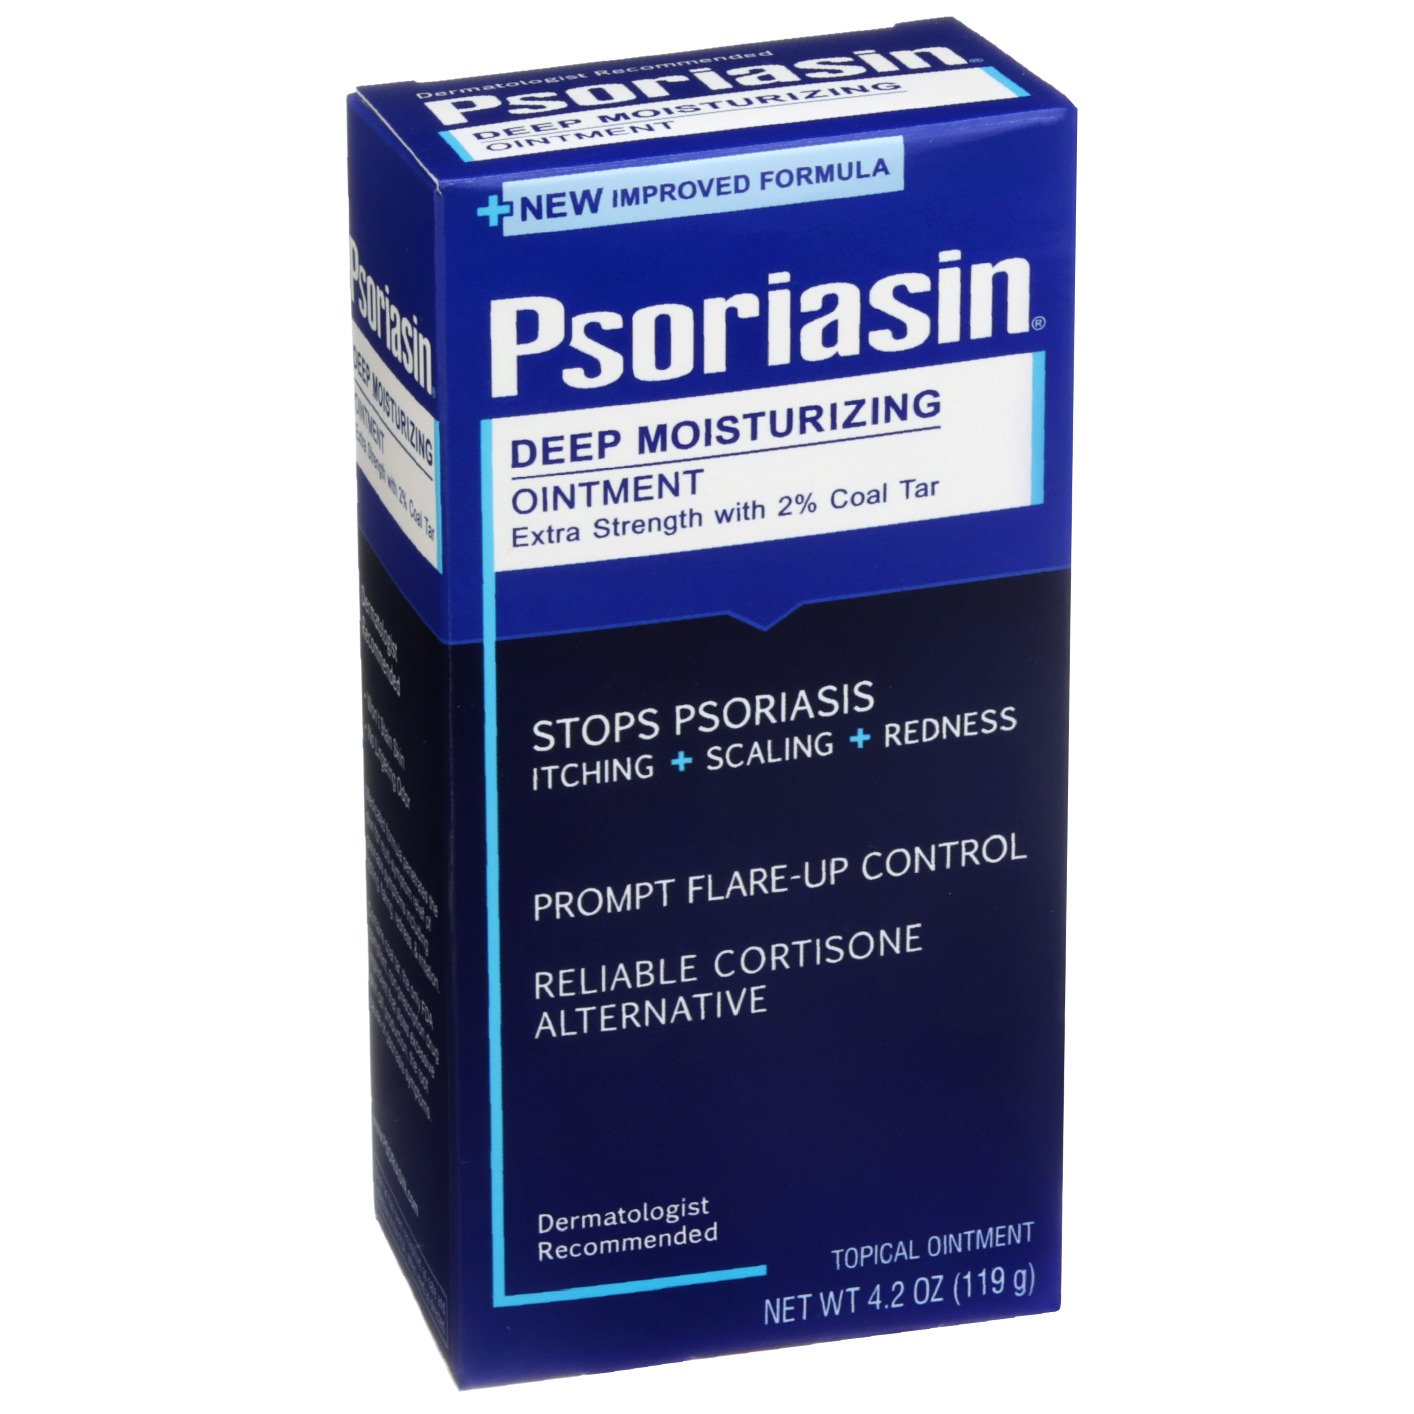 psoriasin ointment multi symptom psoriasis relief